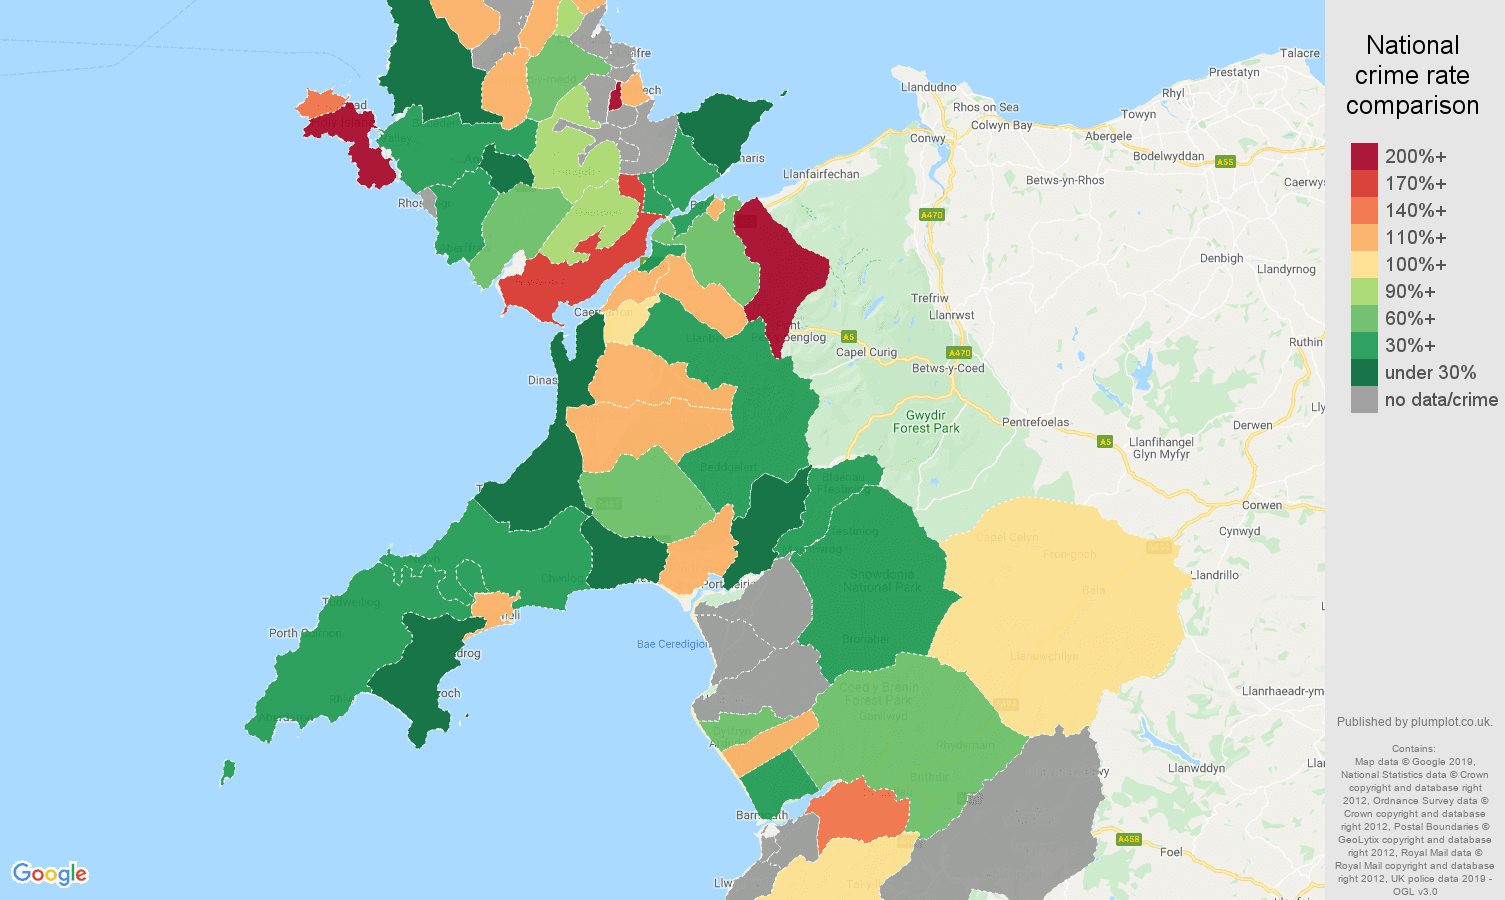 Gwynedd other crime rate comparison map